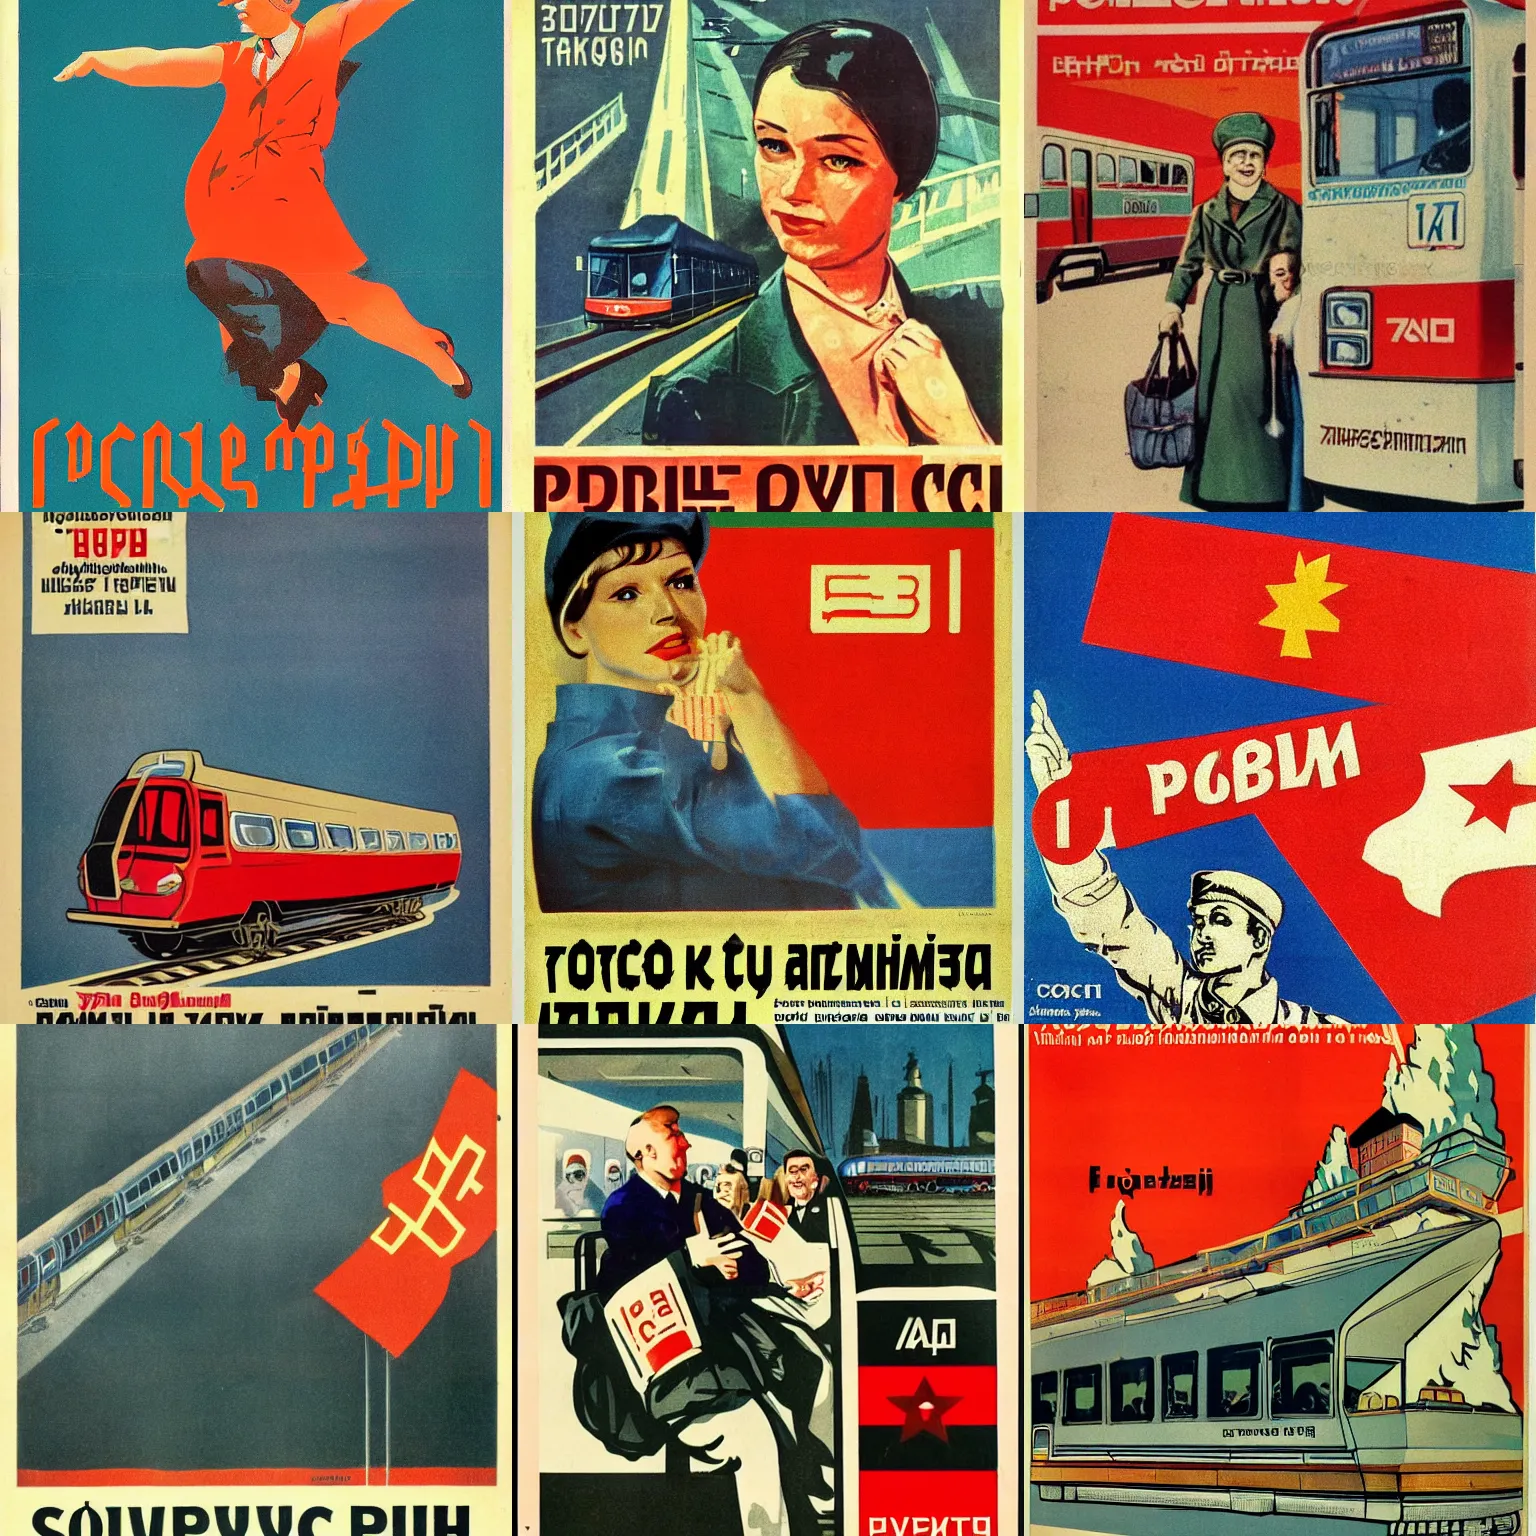 Prompt: Soviet advertisement for public transit